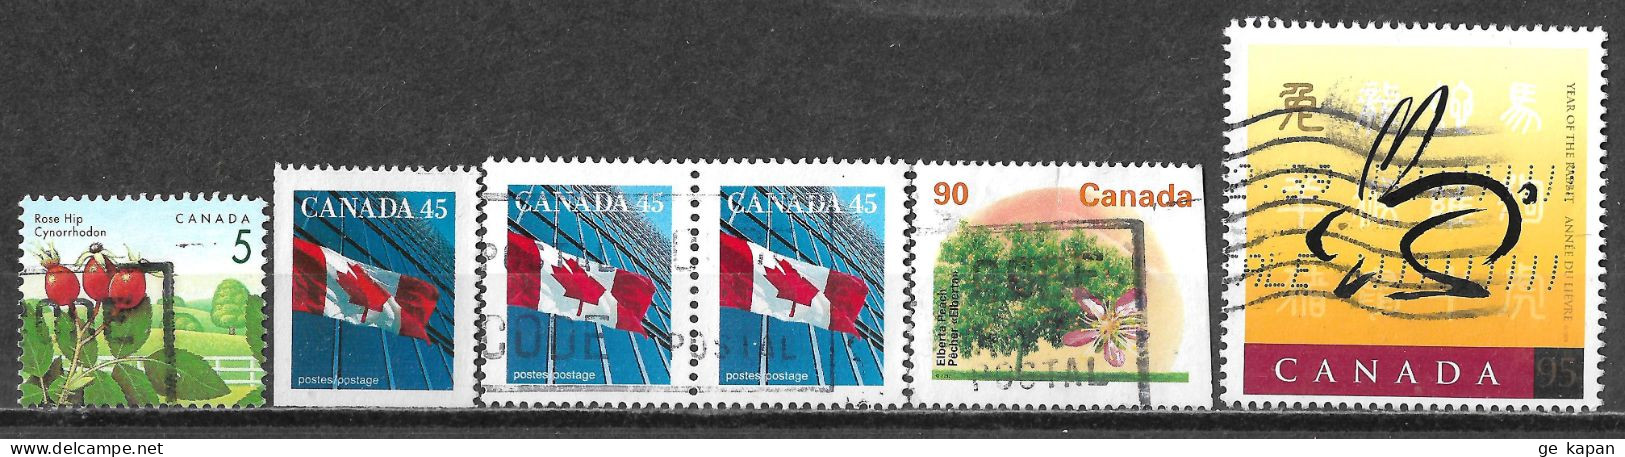 1991,1999 CANADA Set Of 6 USED Stamps (Scott # 1352,1361,1374,1768) CV $3.50 - Oblitérés